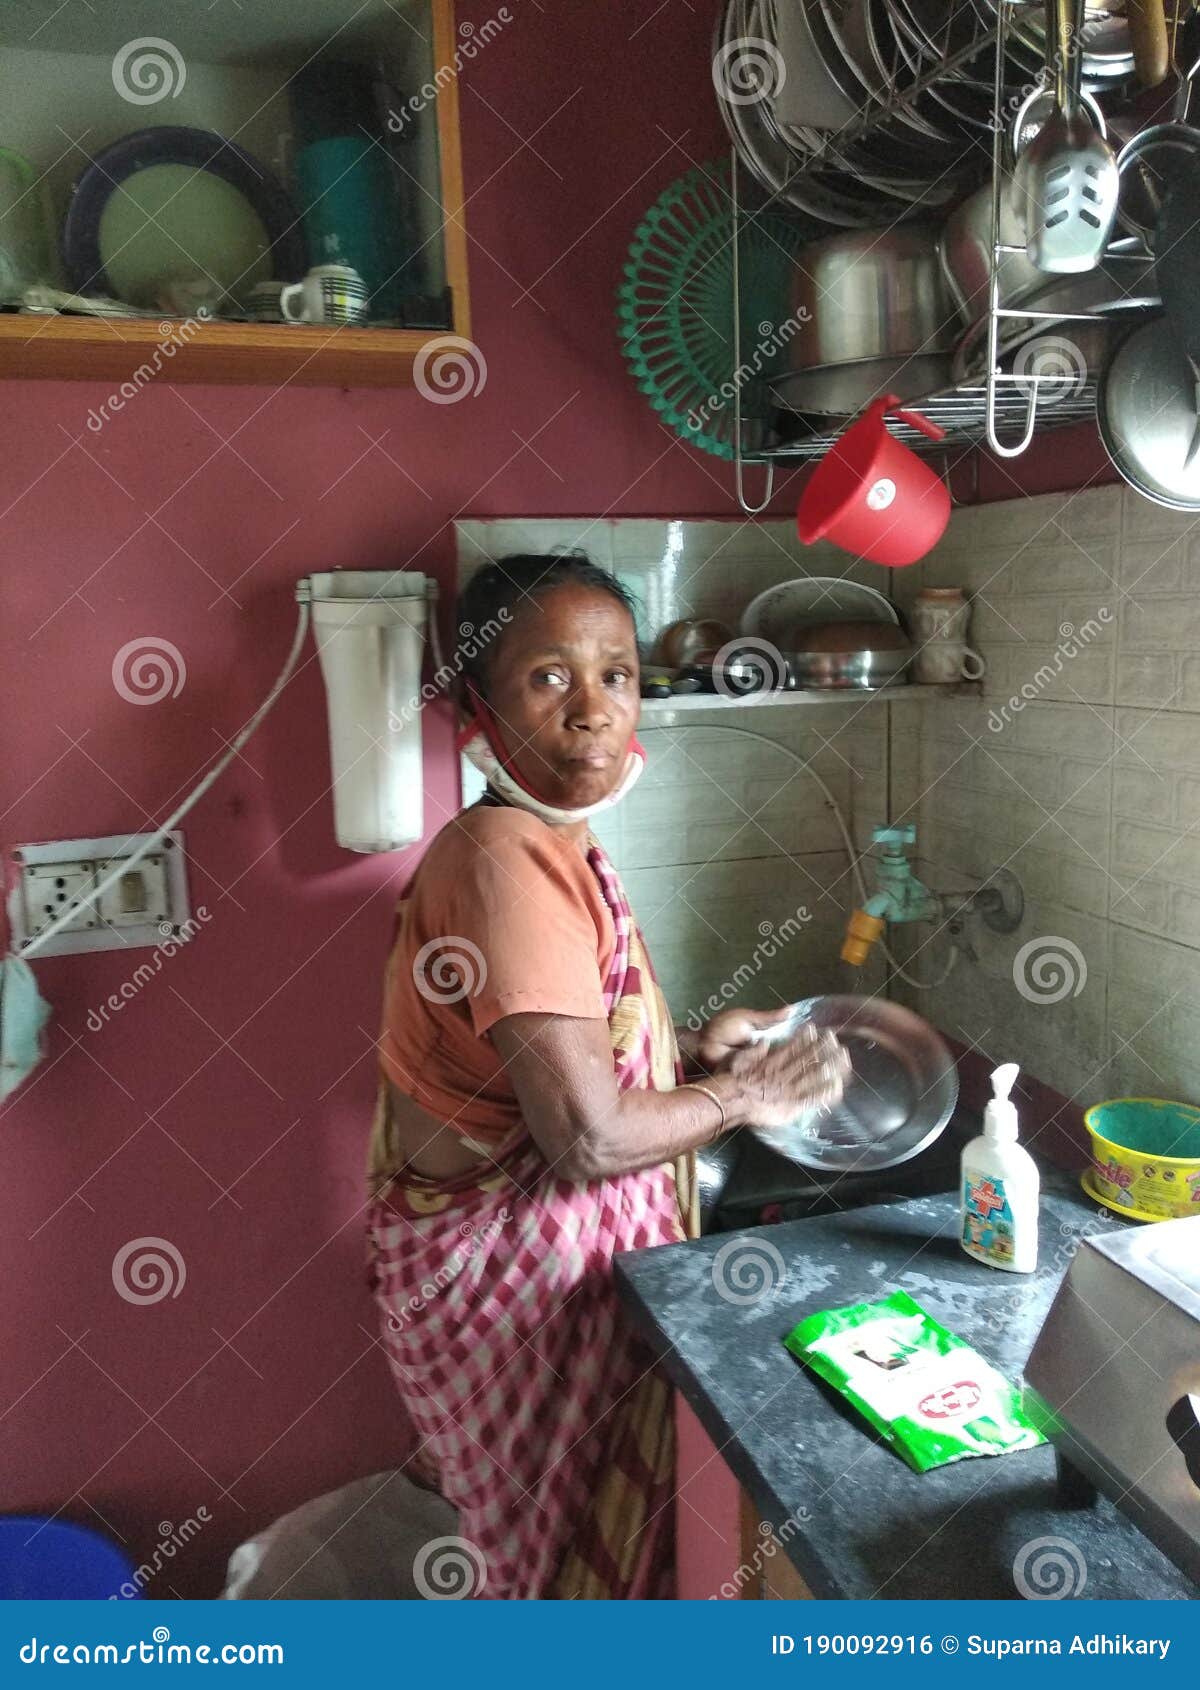 desi maid in kitchen free pics hd